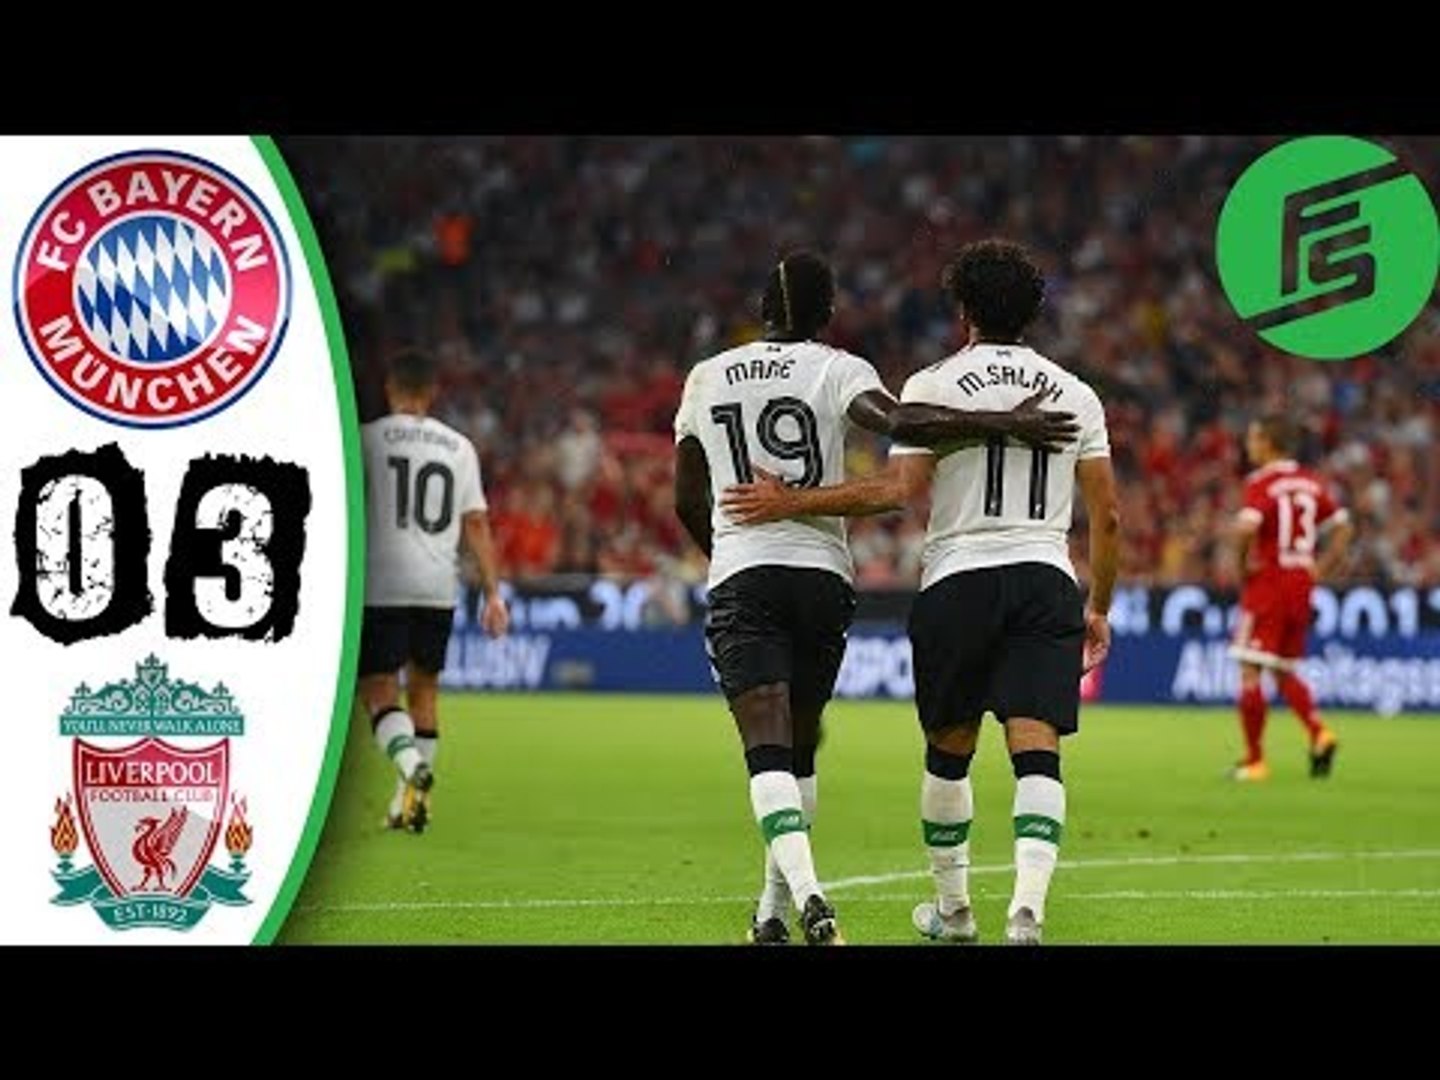 Bayern Munich vs Liverpool 0-3 - Highlights & Goals - 01 August 2017 -  video Dailymotion